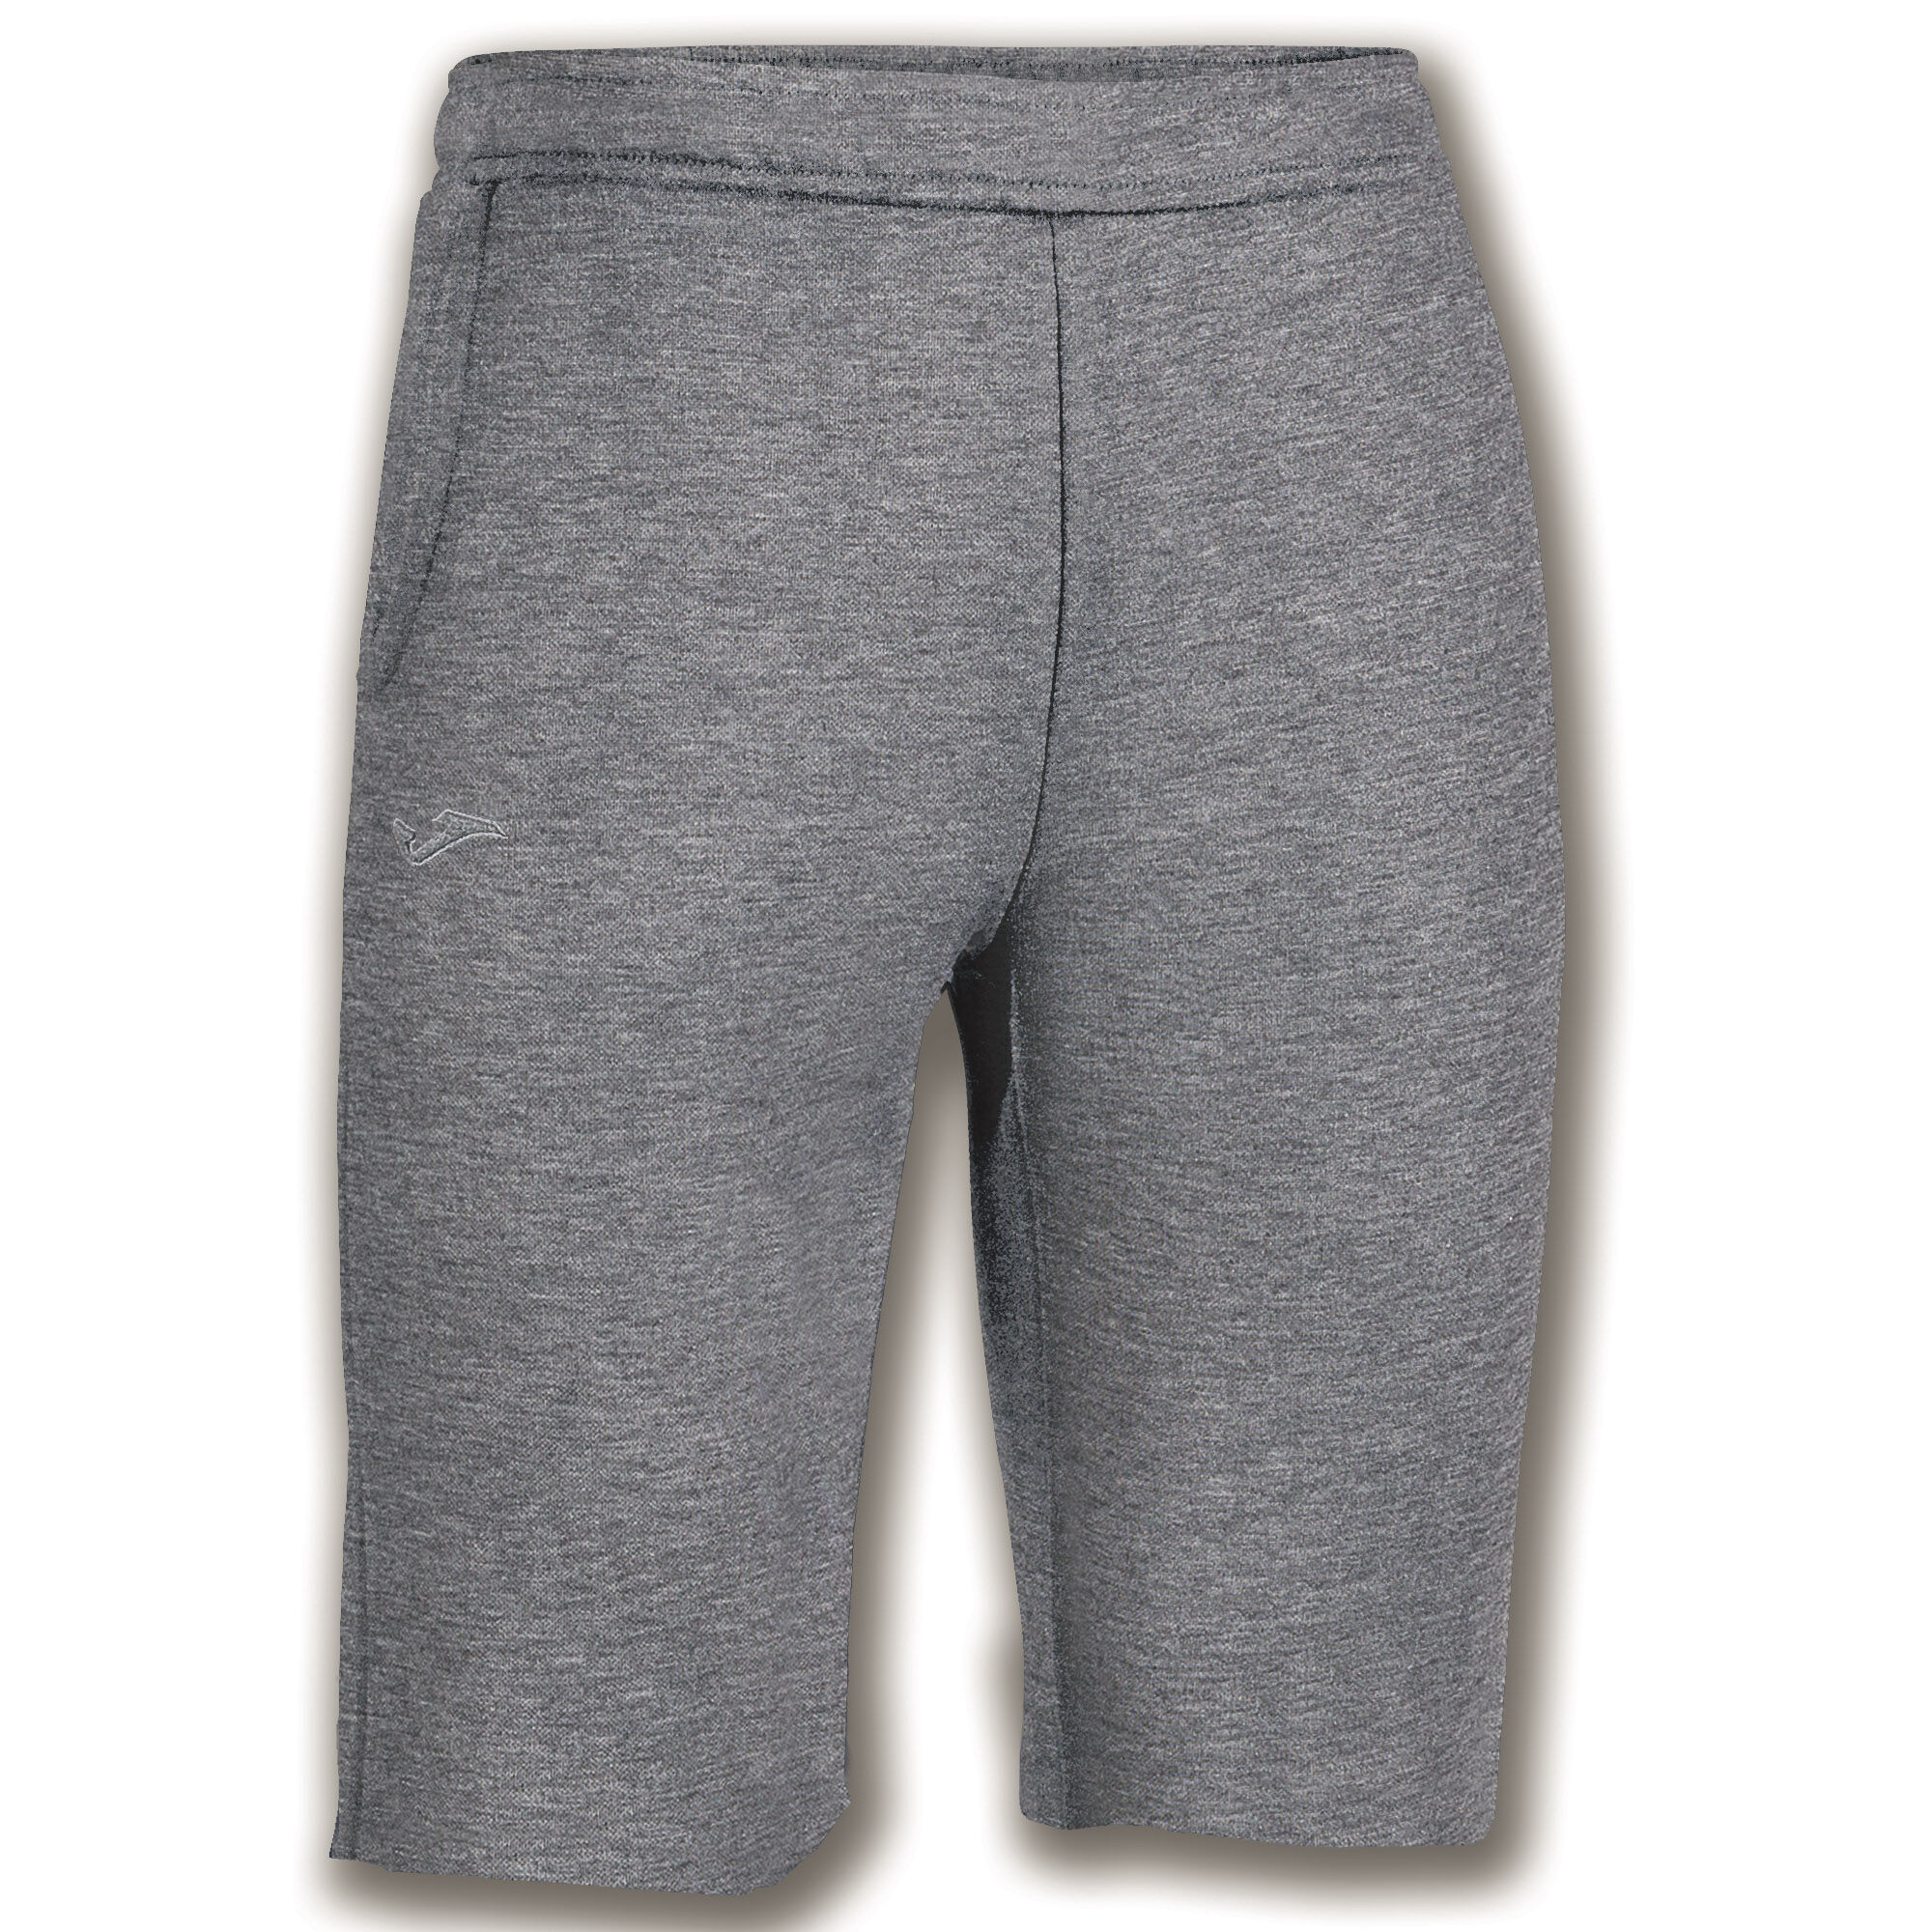 Bermuda shorts man Salónica gray